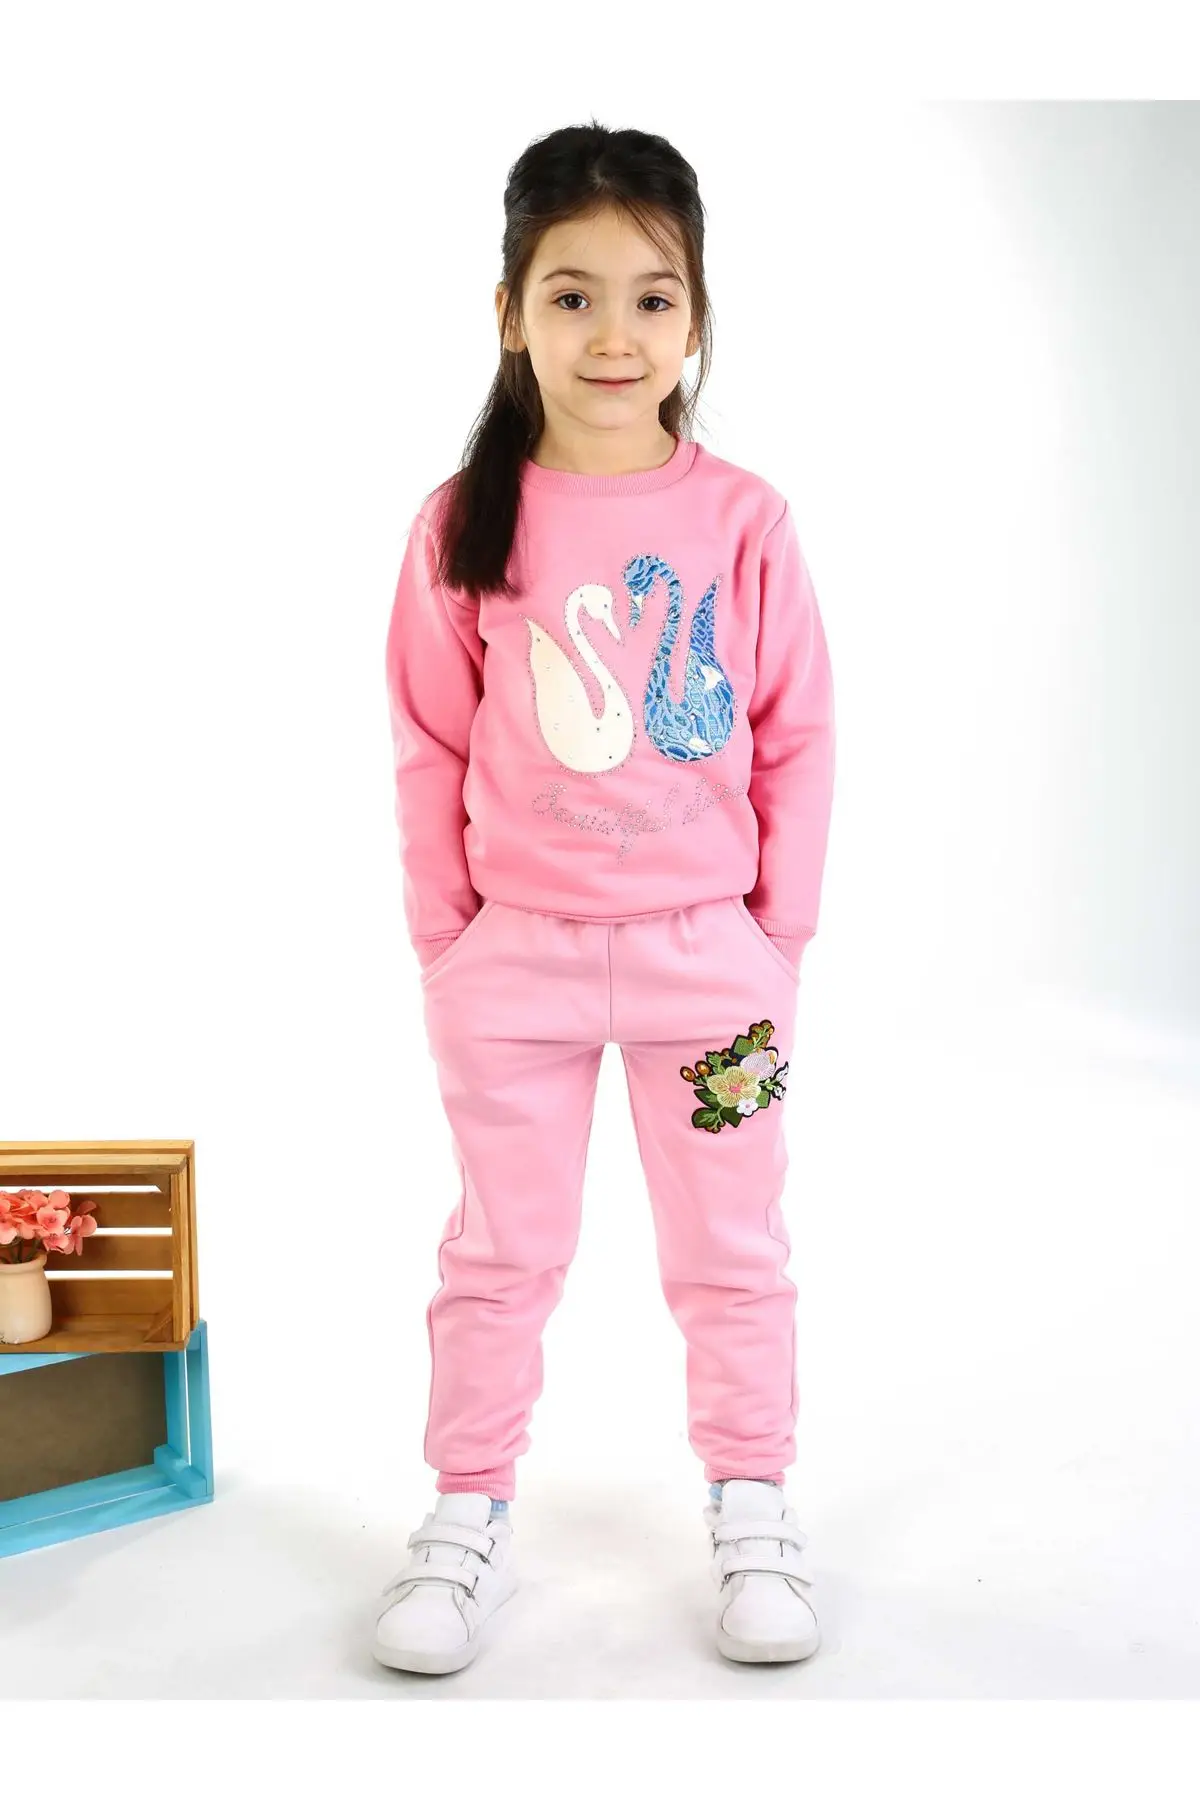 Lys Pink Sæsonåben Pige Barn Sweatshirt